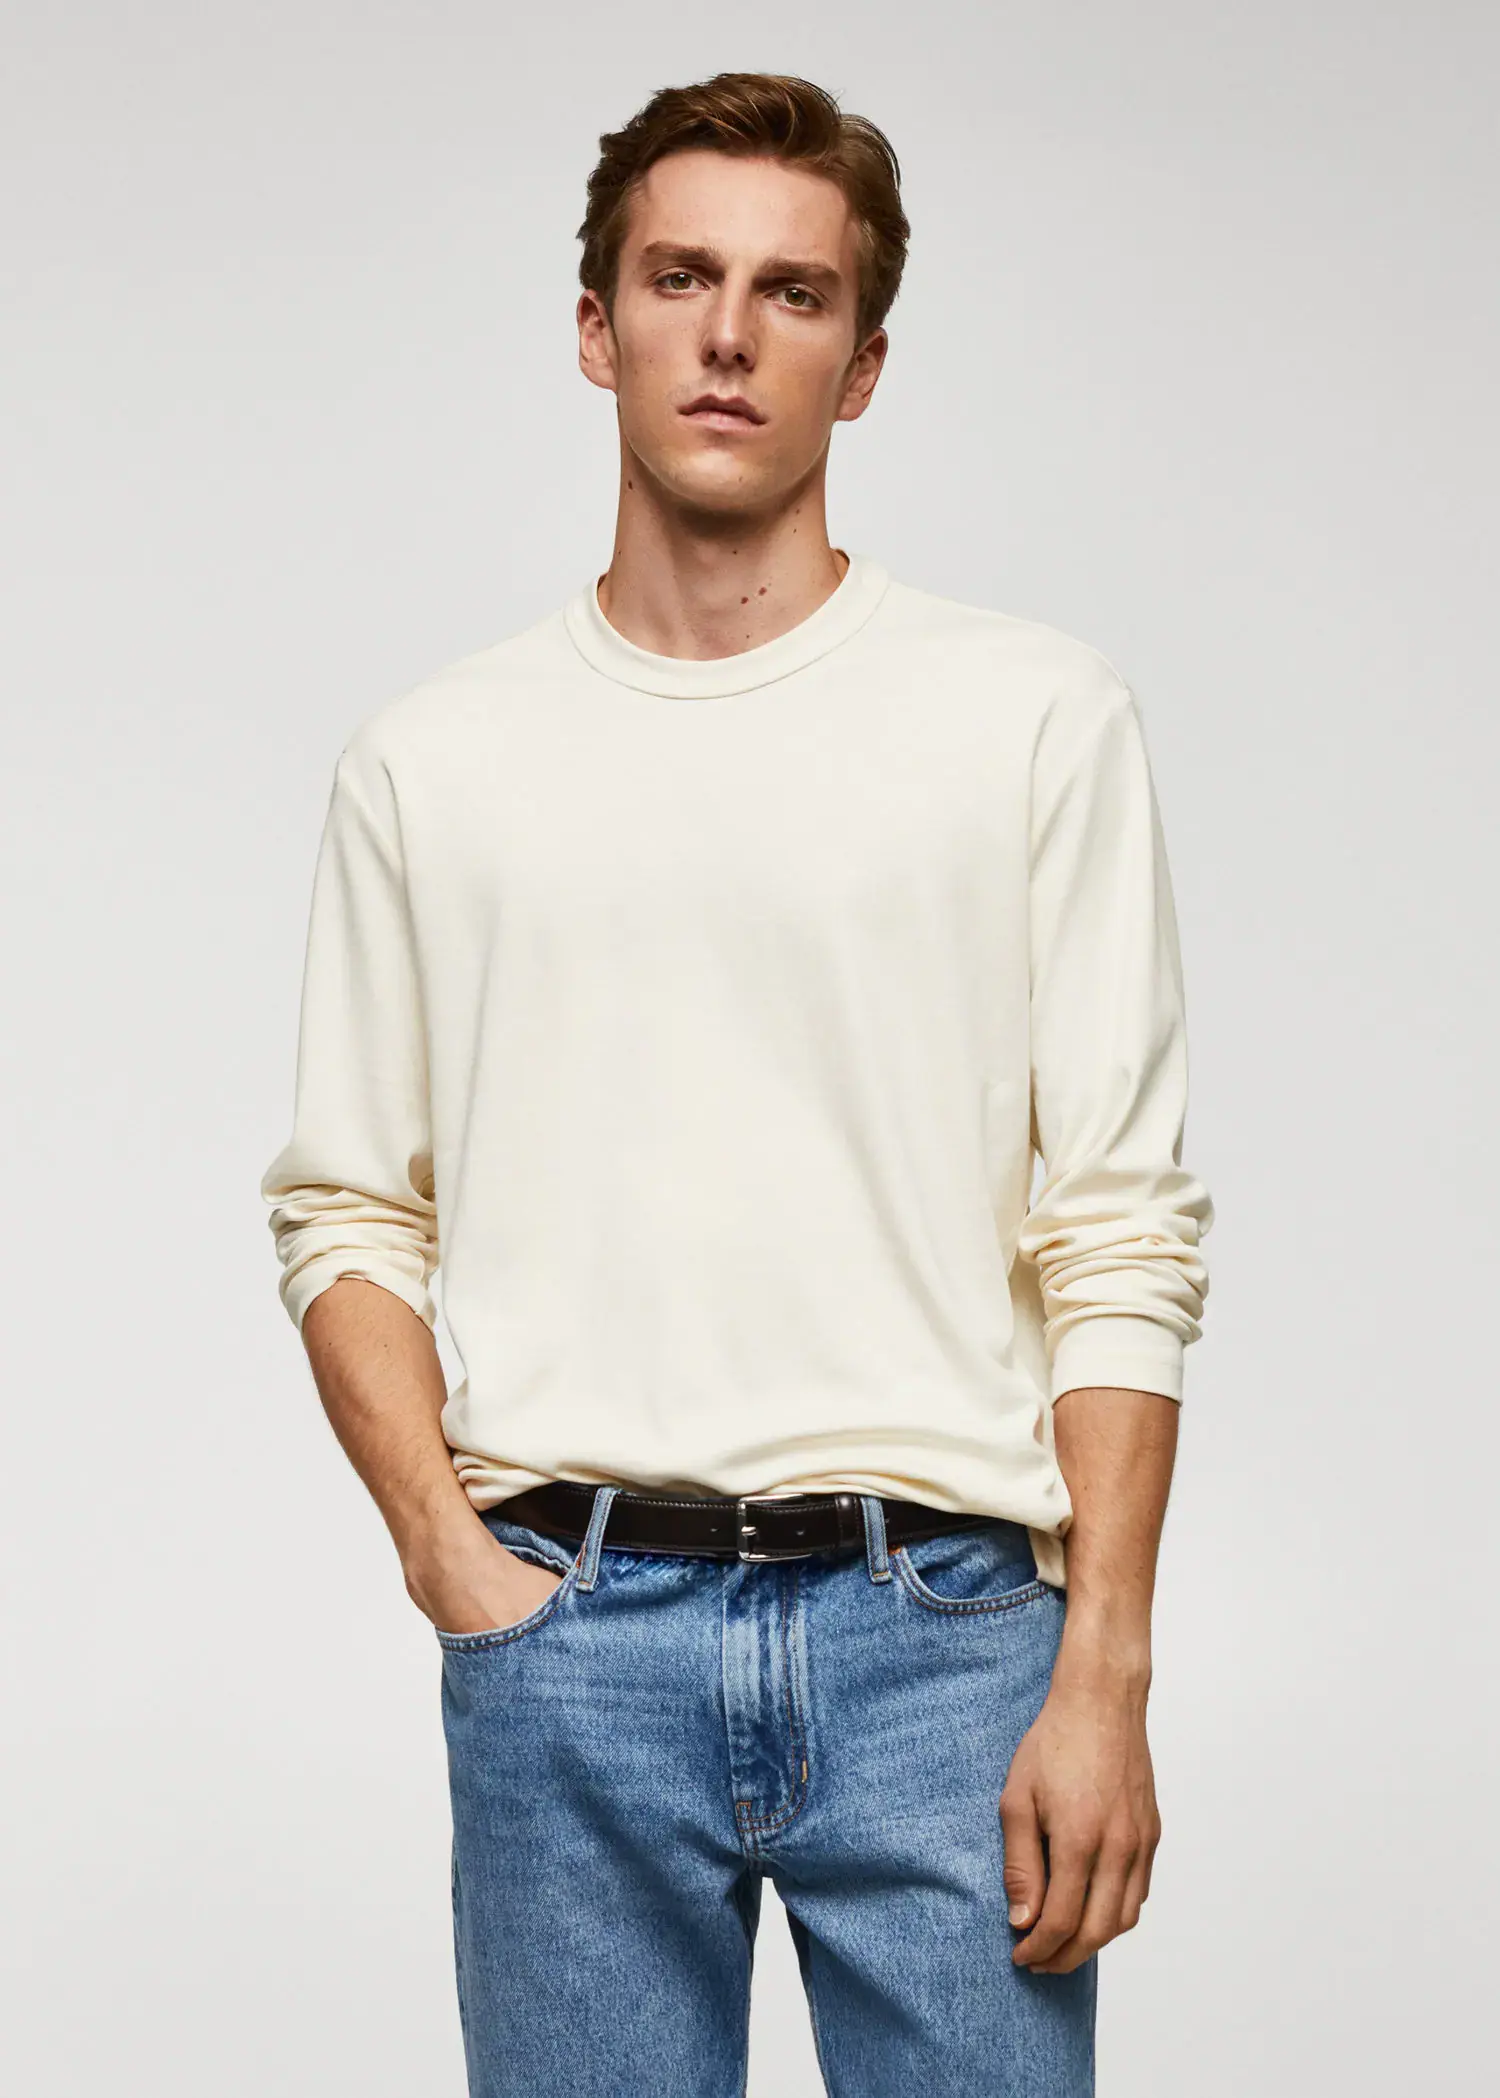 Mango 100% cotton long-sleeved t-shirt. 1